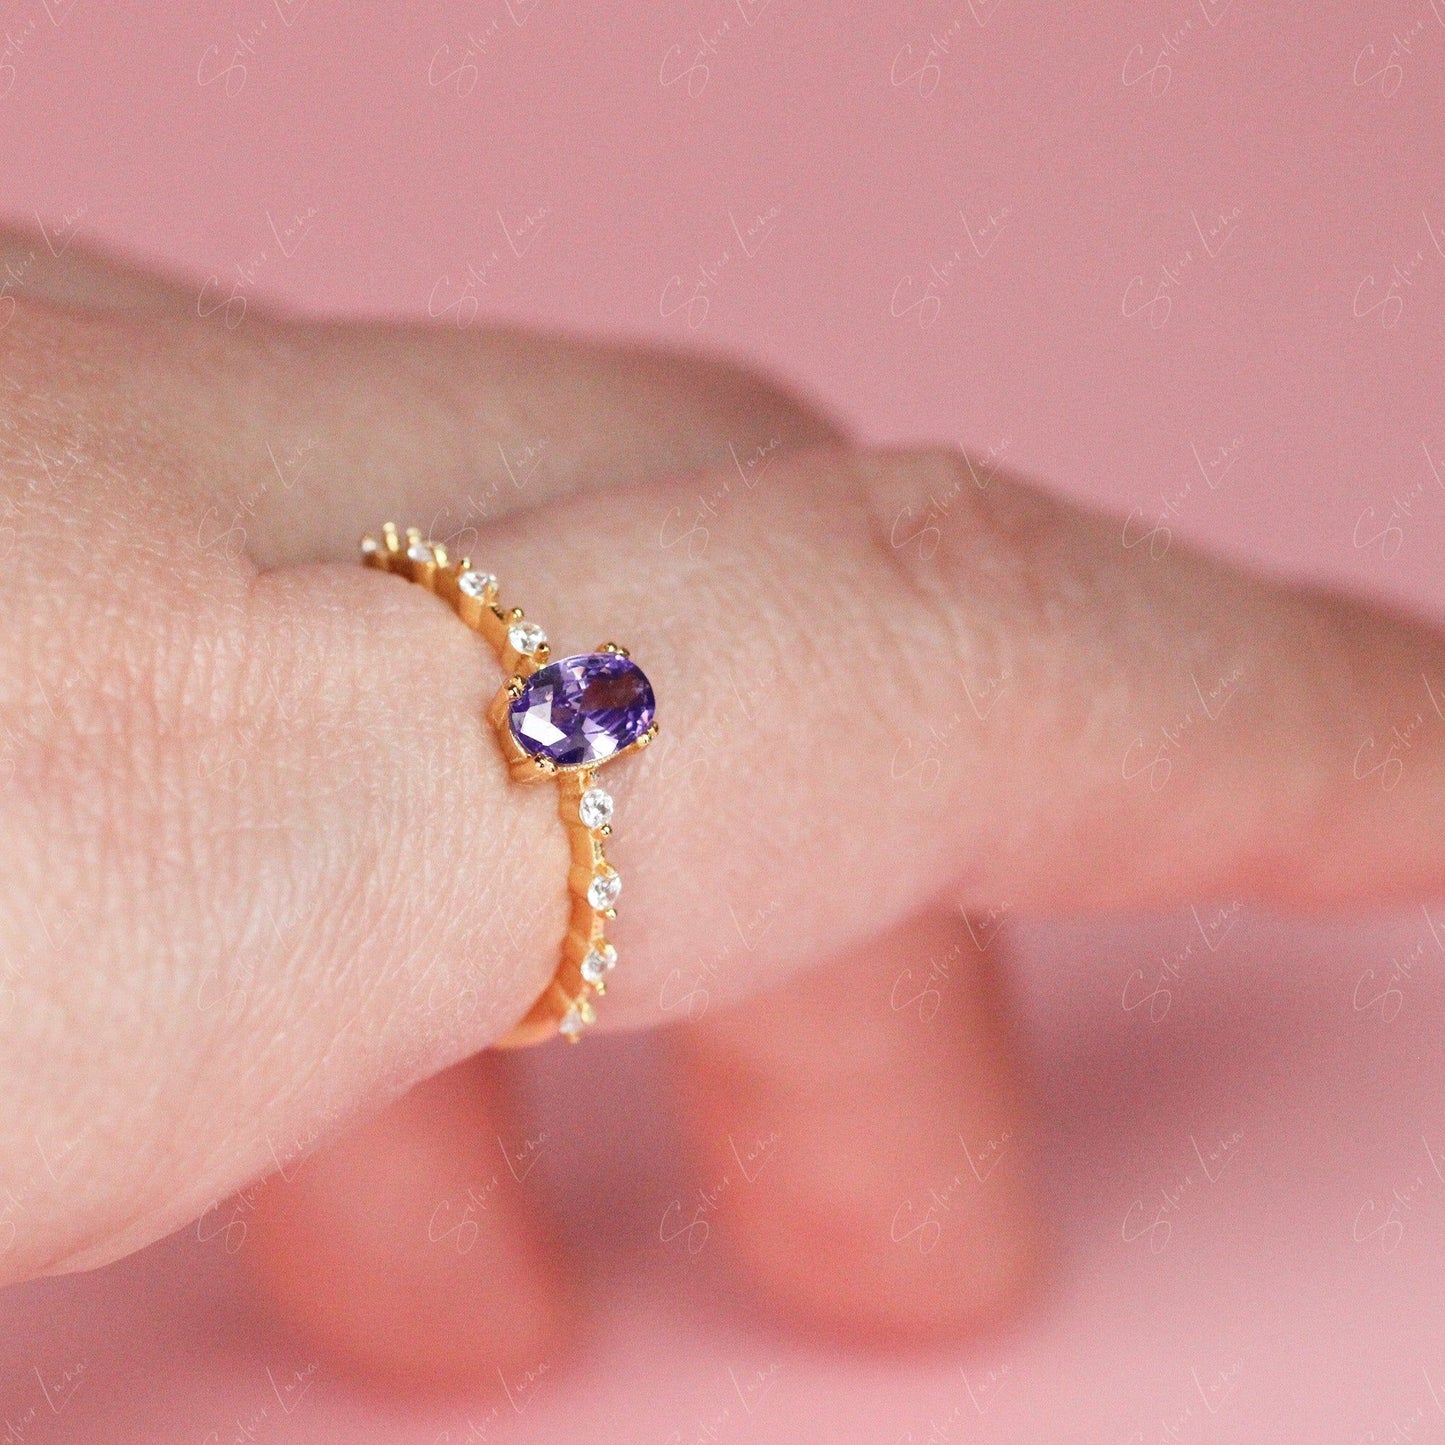 Purple cubic zirconia oval stone ring